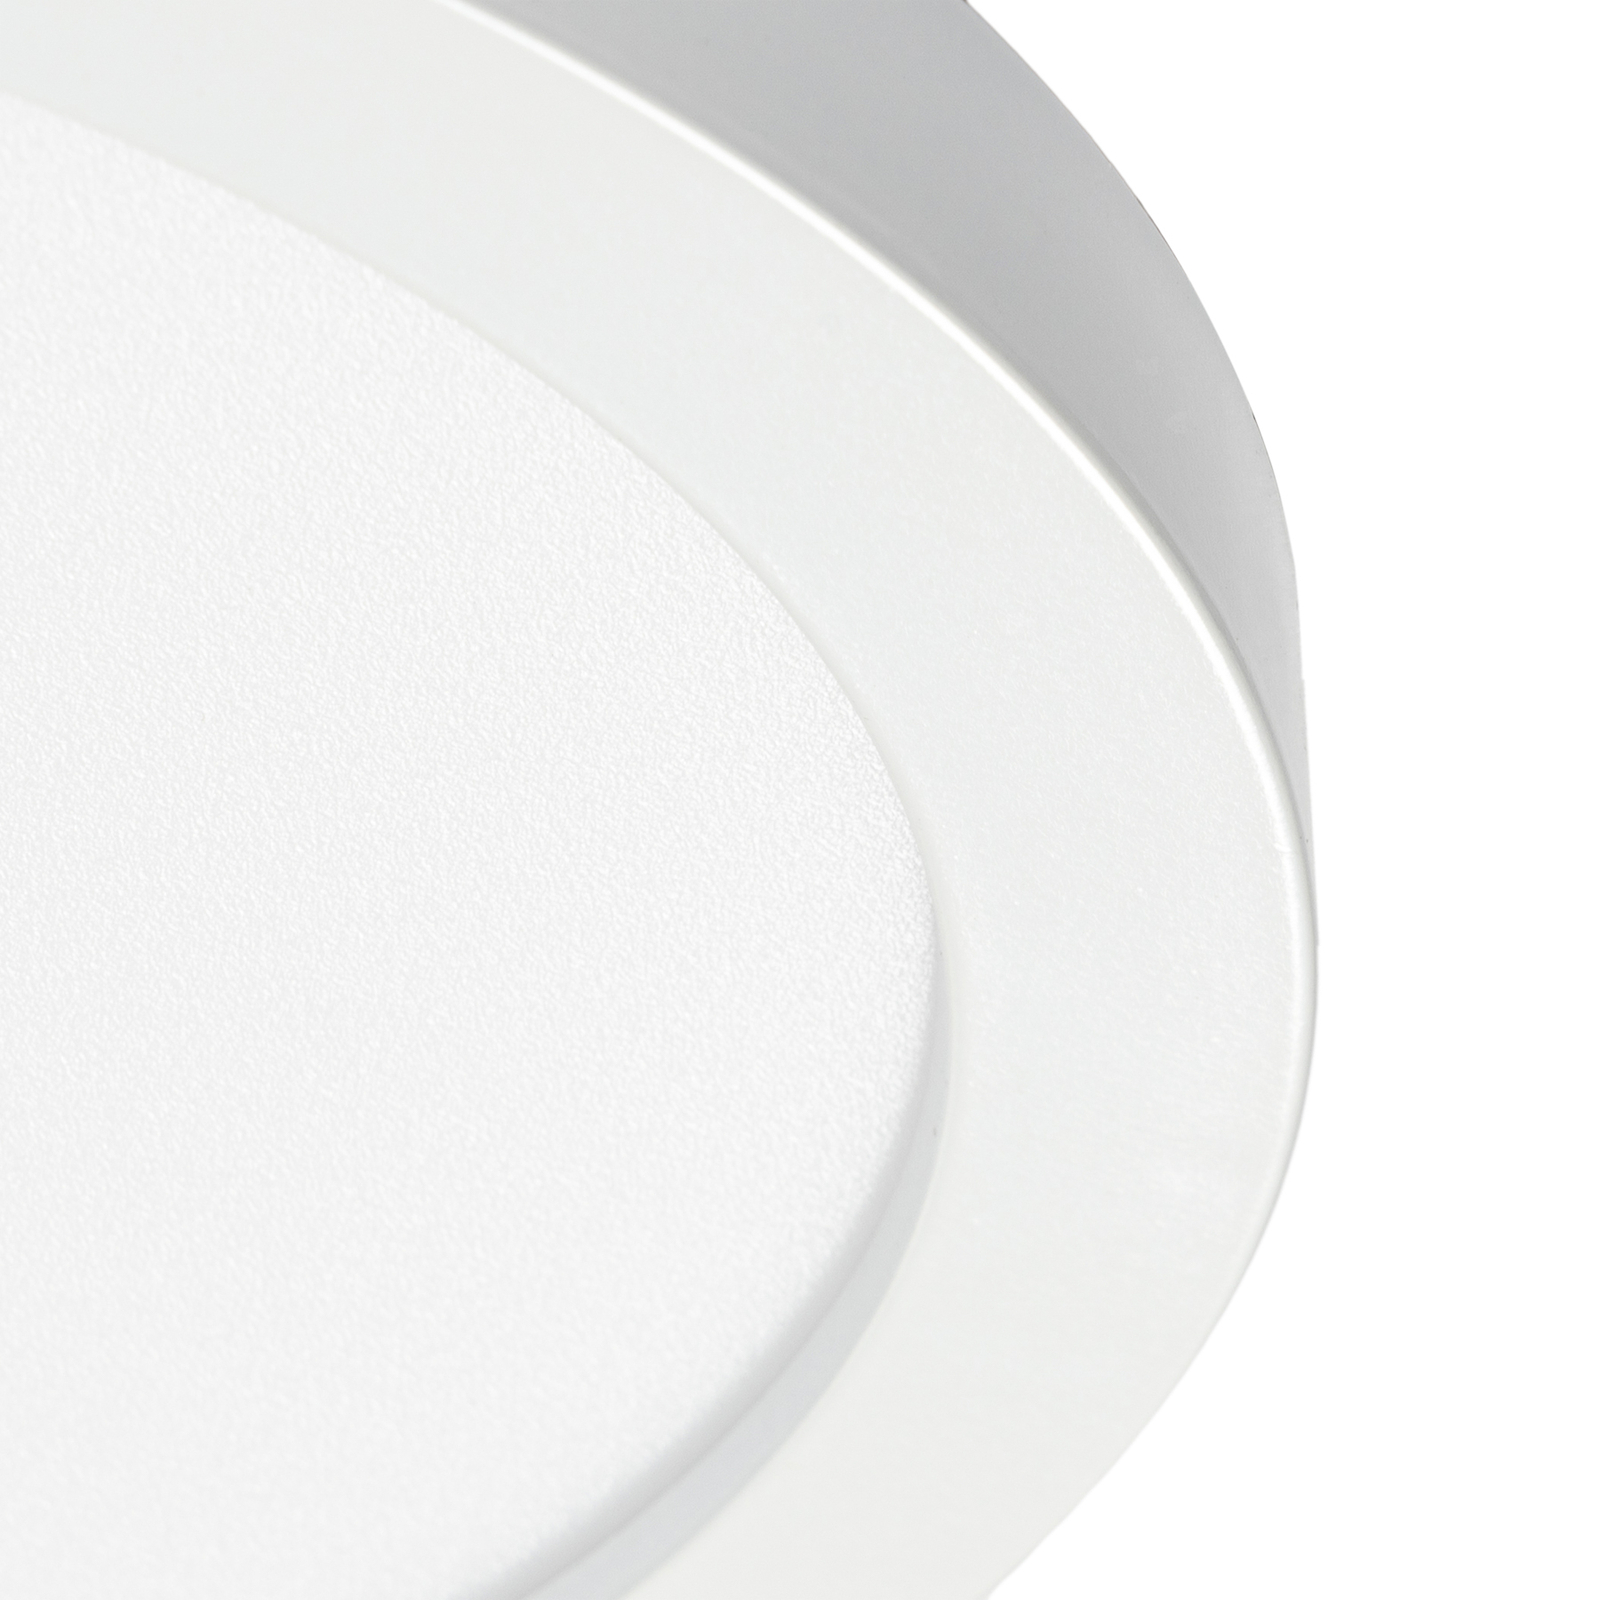 Solvie LED-taklampe, hvit, rund, Ø 30 cm